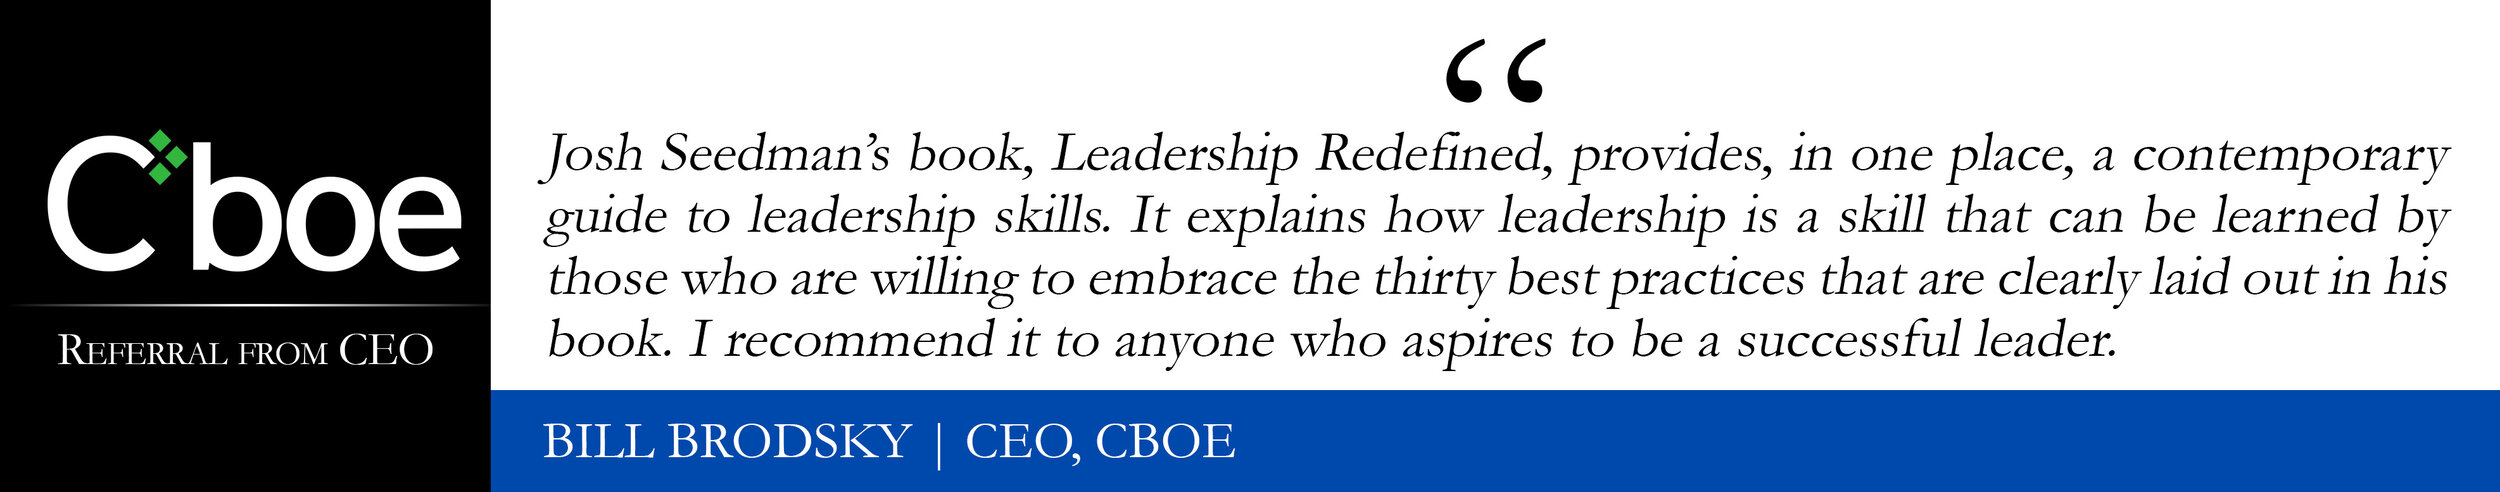 Leadership Redefined Quote 7.jpg